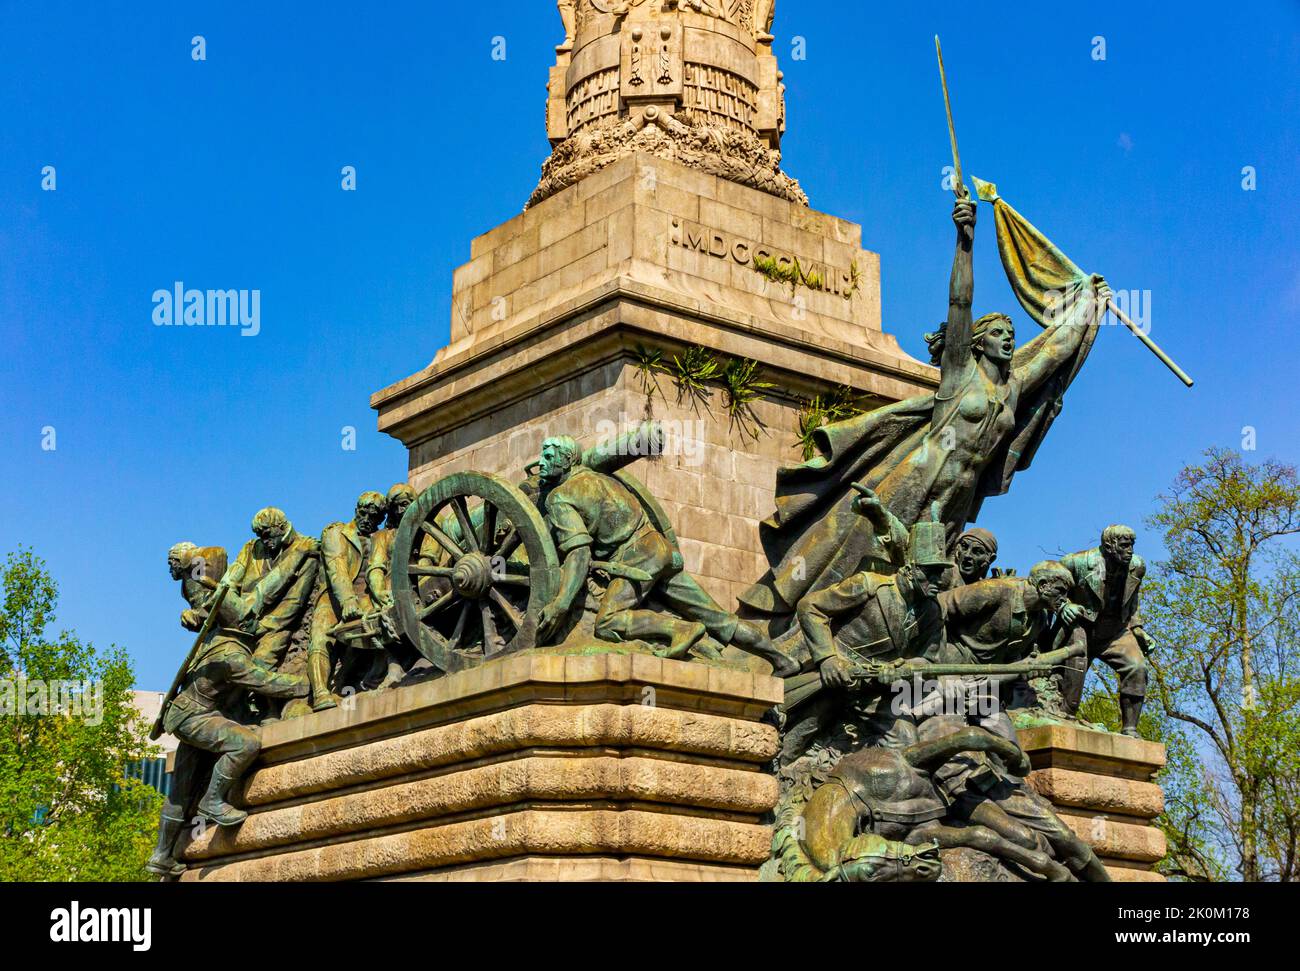 Monumento a Guerra Peninsular in Boavista Porto Portugal designed by Jose Marques de Silva and Alves de Sousa to mark the defeat of the French army. Stock Photo